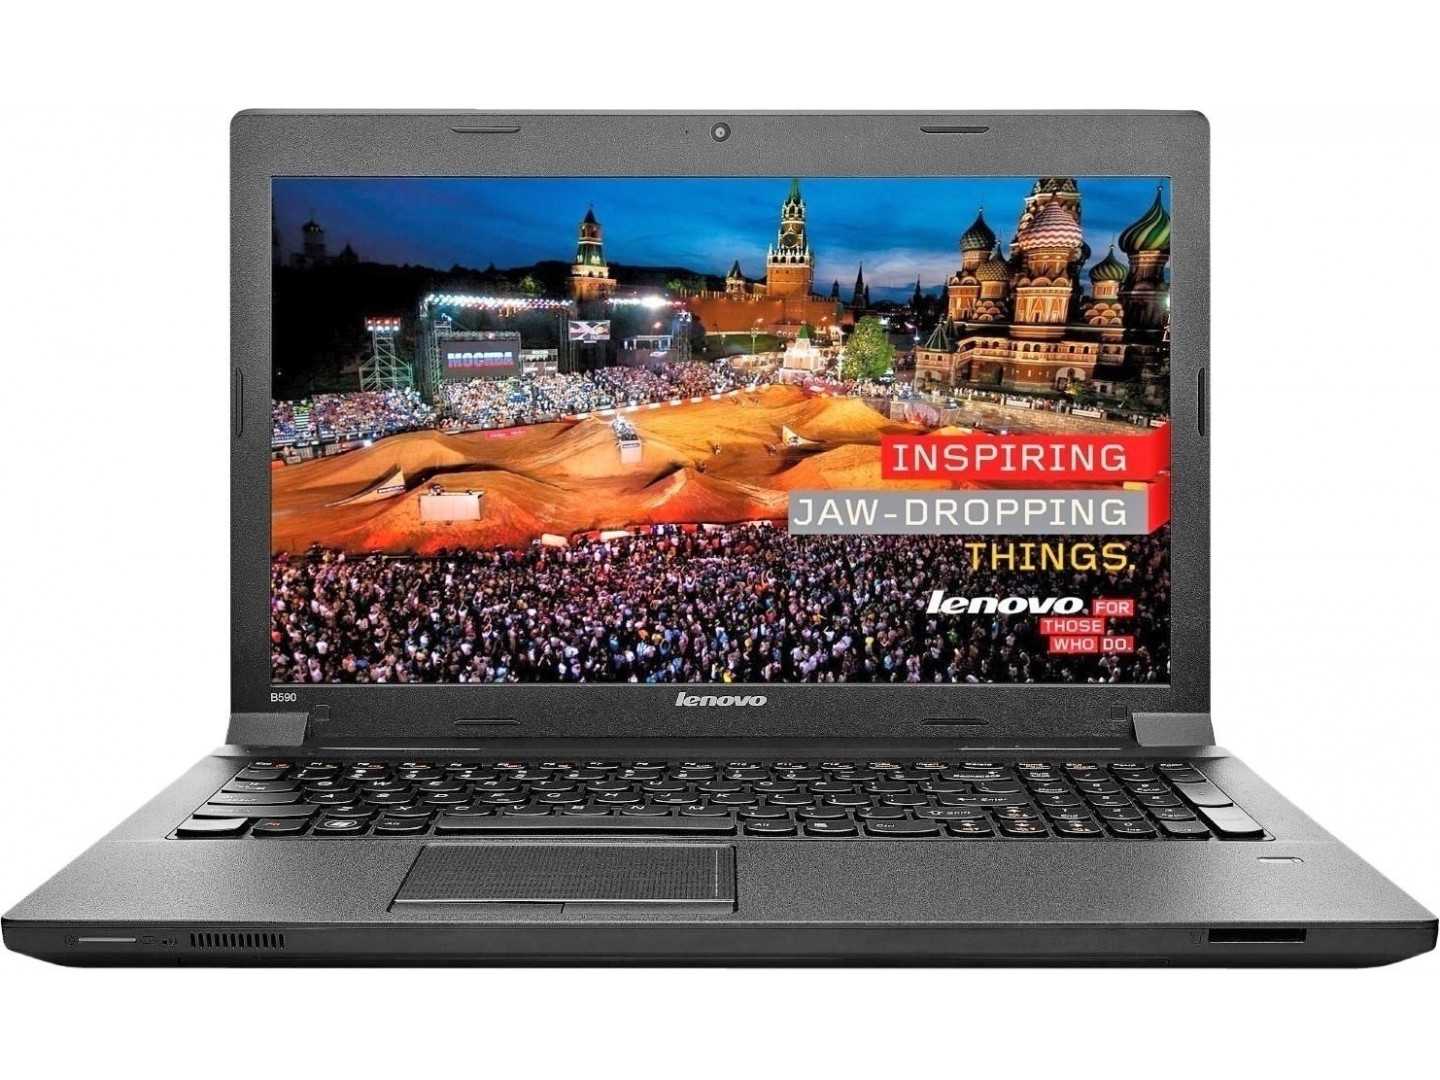 Lenovo ideapad z710a (59-399560)
                            цены в россии